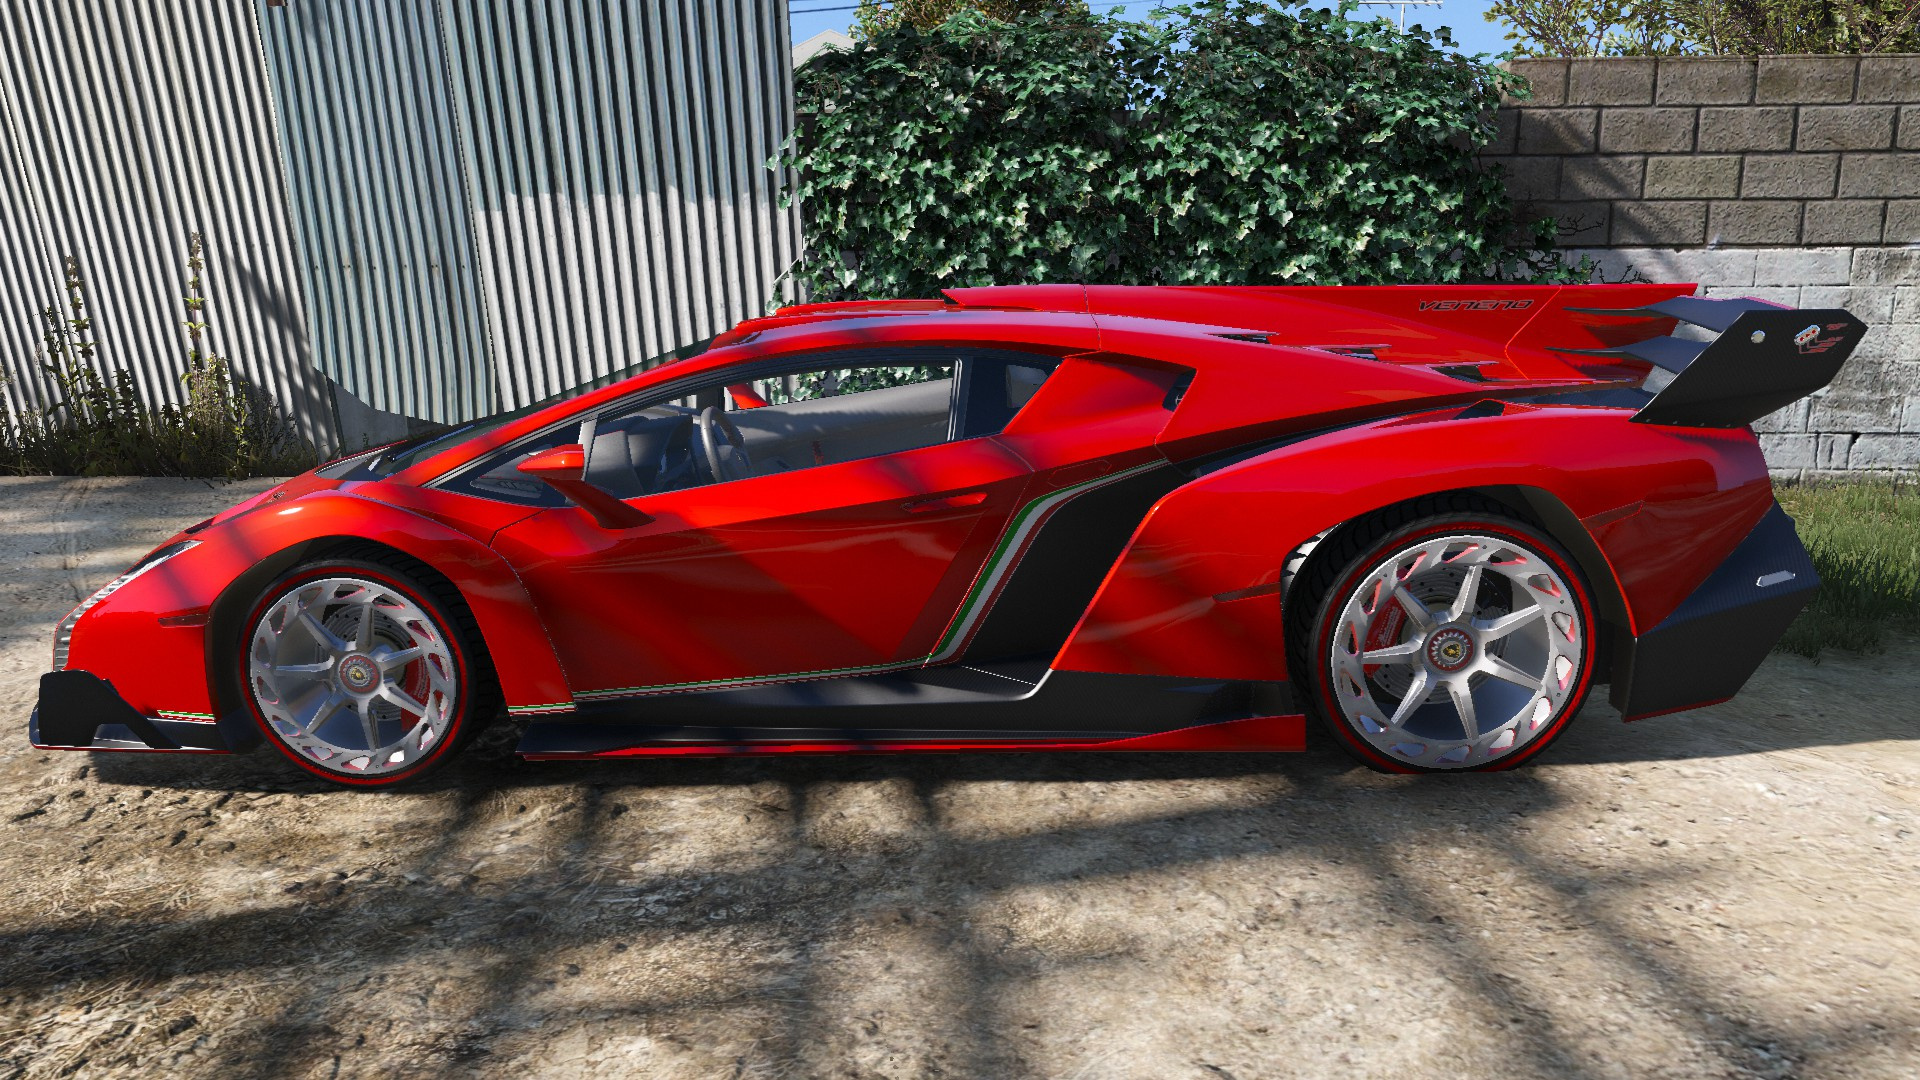  Lamborghini  Veneno 2013 GTA5 Mods com